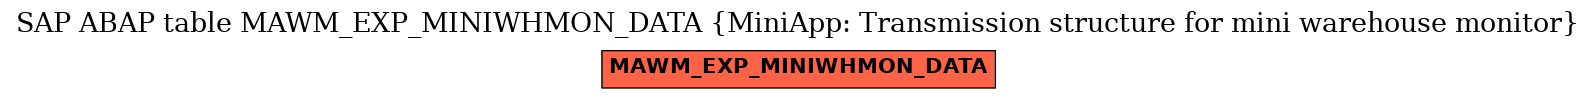 E-R Diagram for table MAWM_EXP_MINIWHMON_DATA (MiniApp: Transmission structure for mini warehouse monitor)